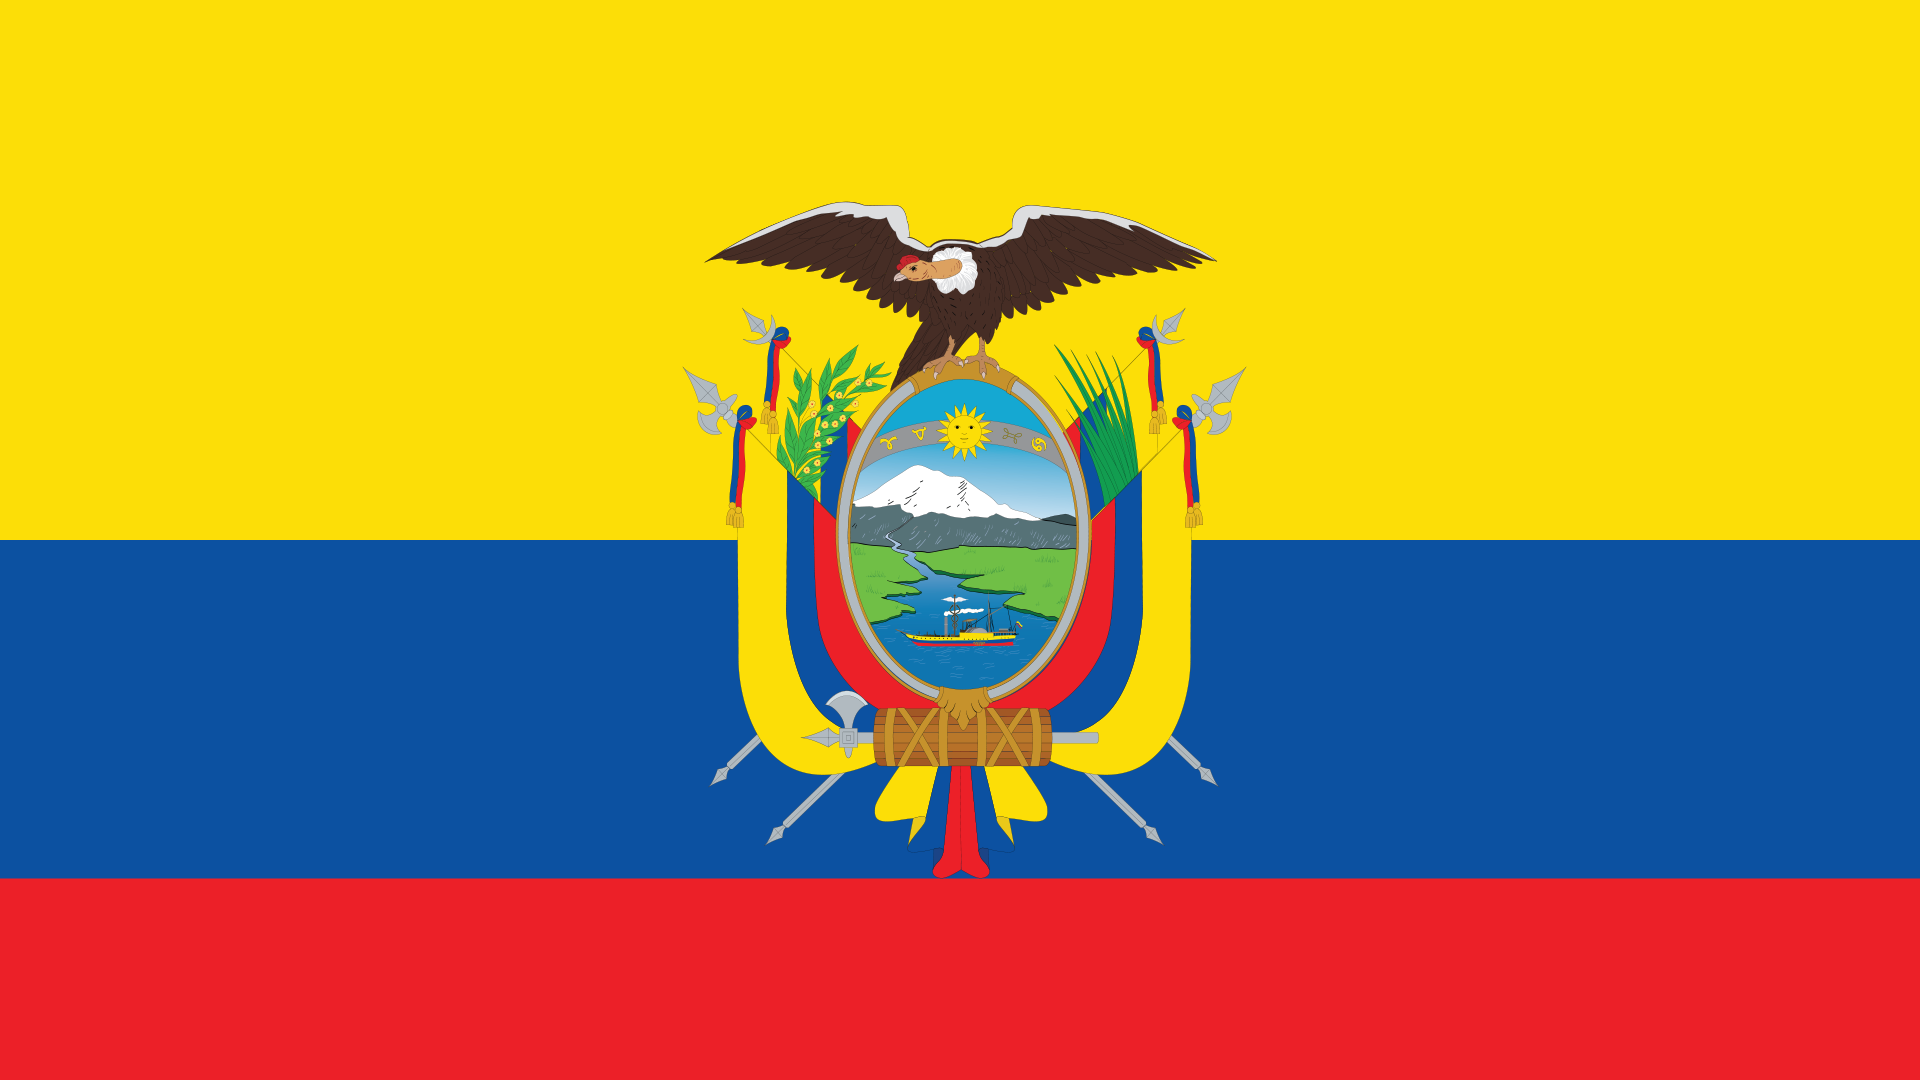 A South American flag